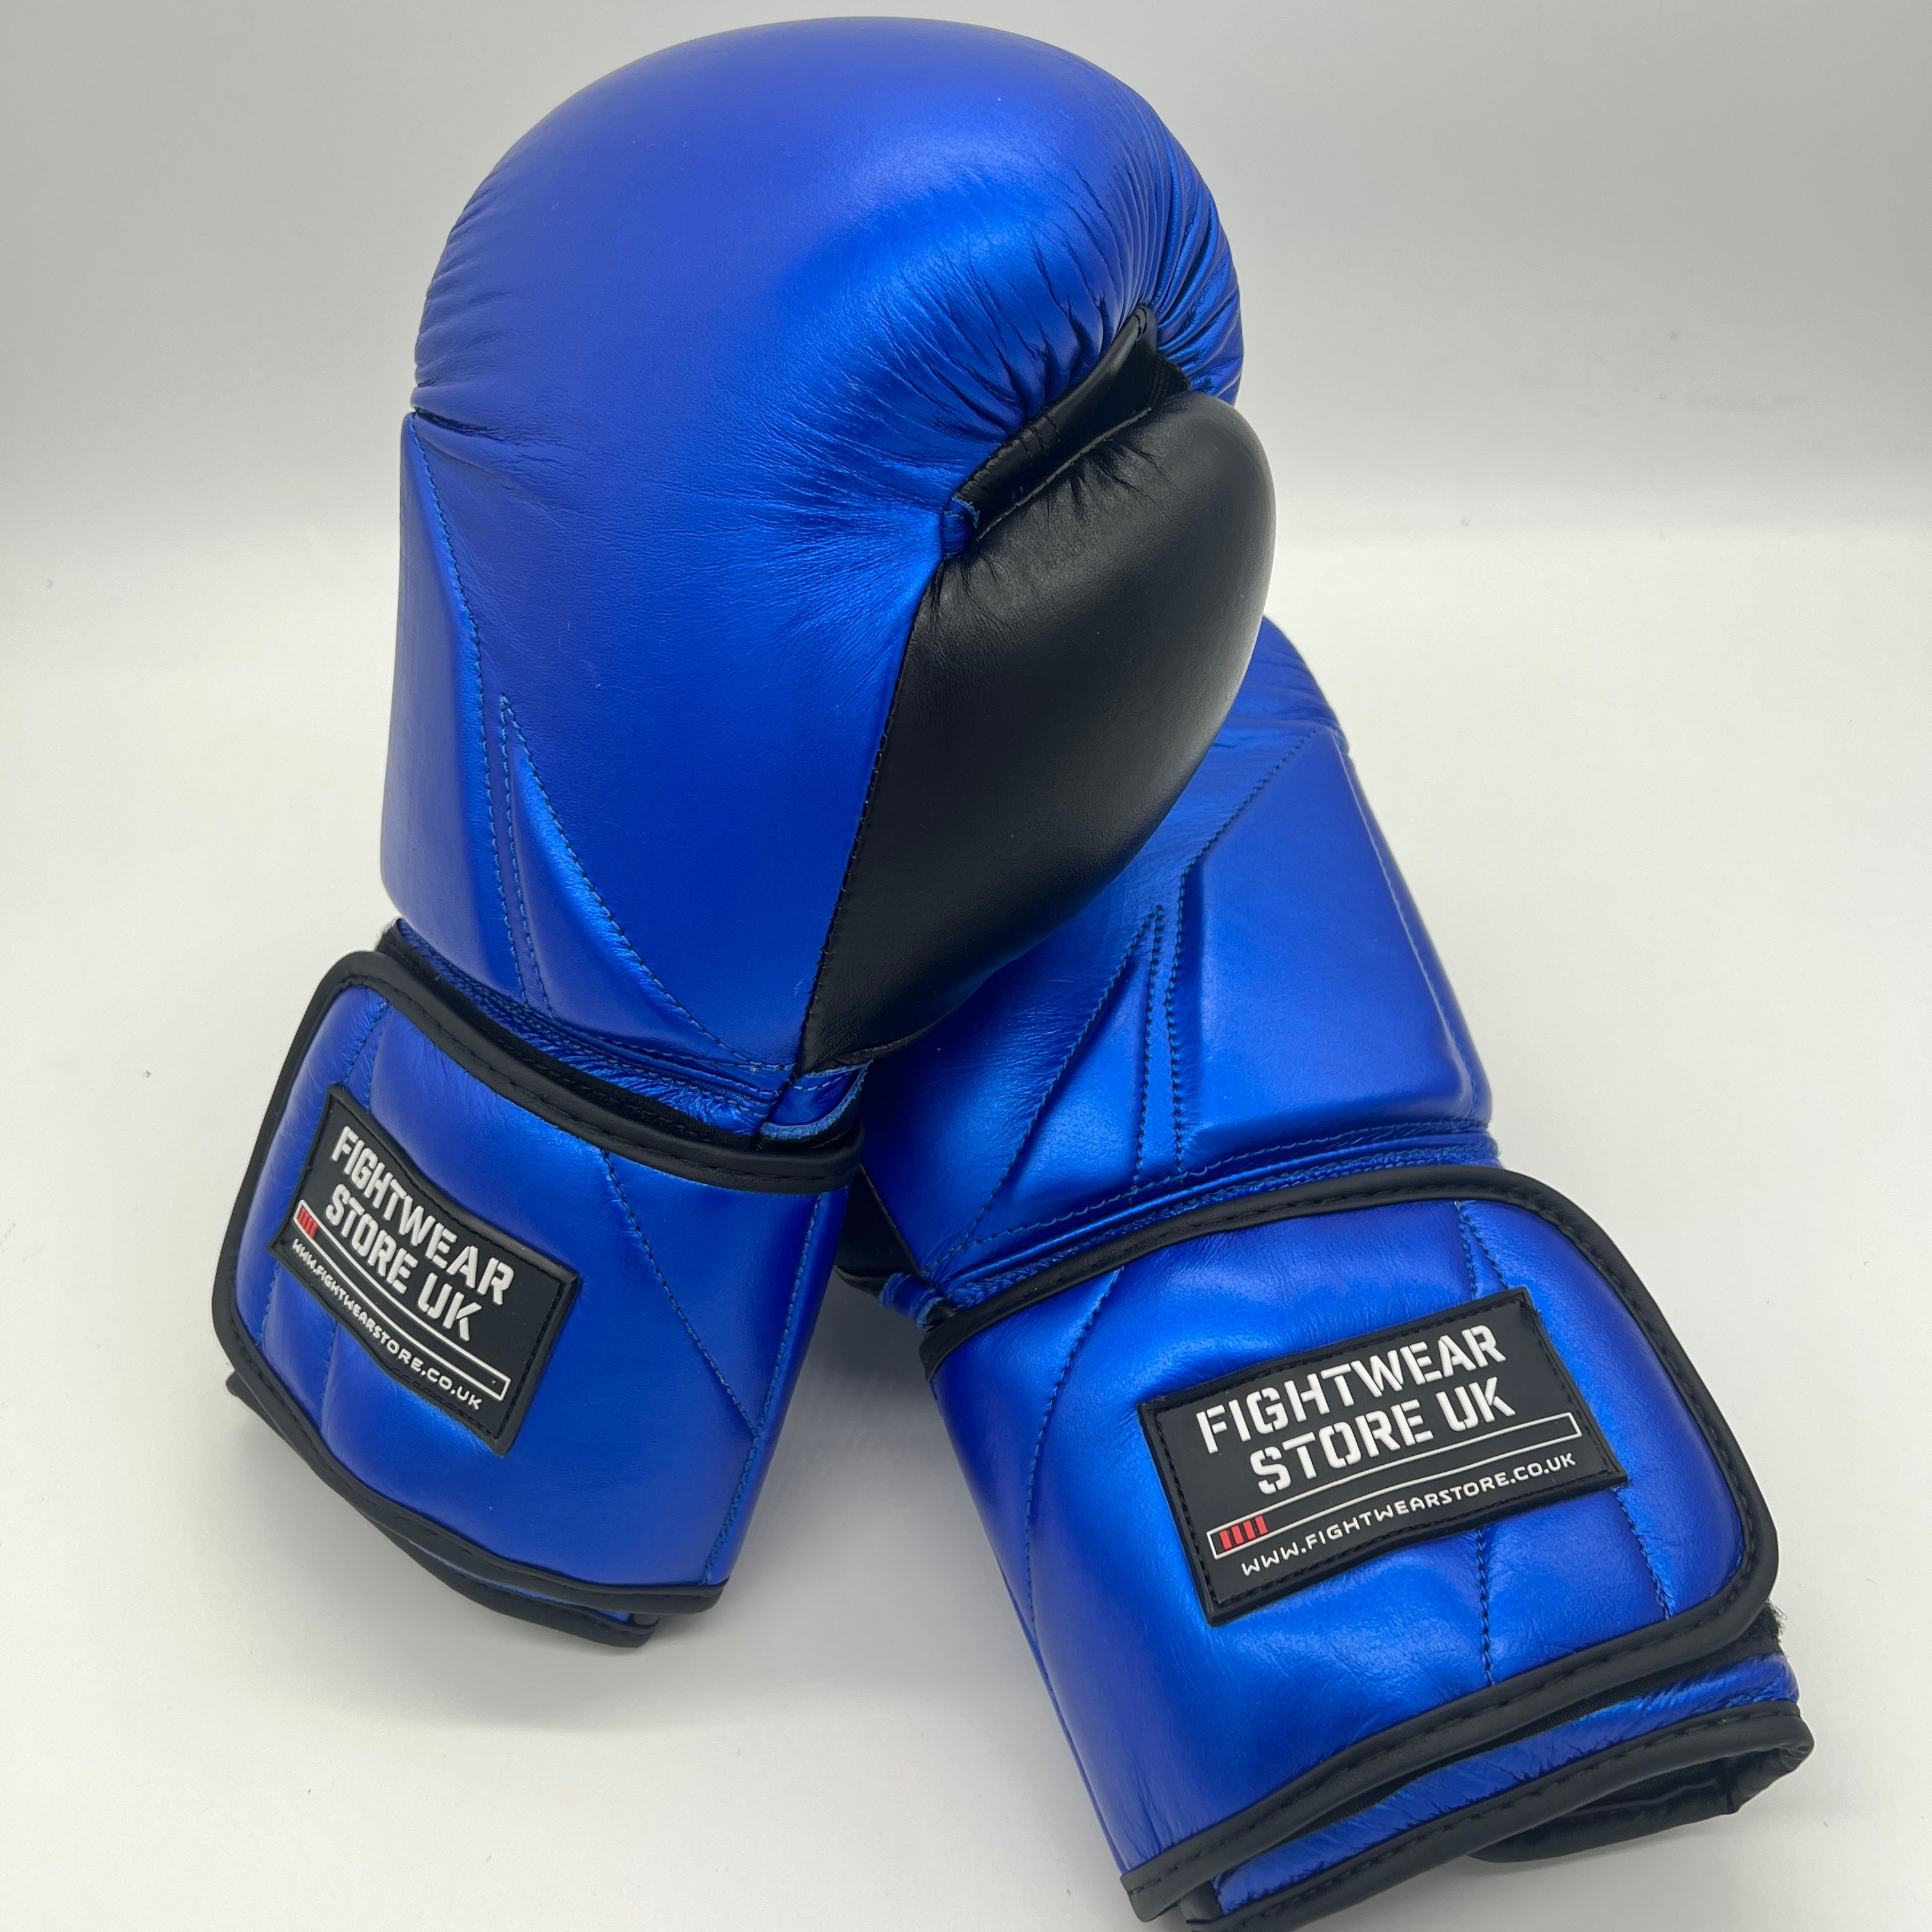 Fightwear Store UK Voyager A1: Metallic Blue Boxing Gloves